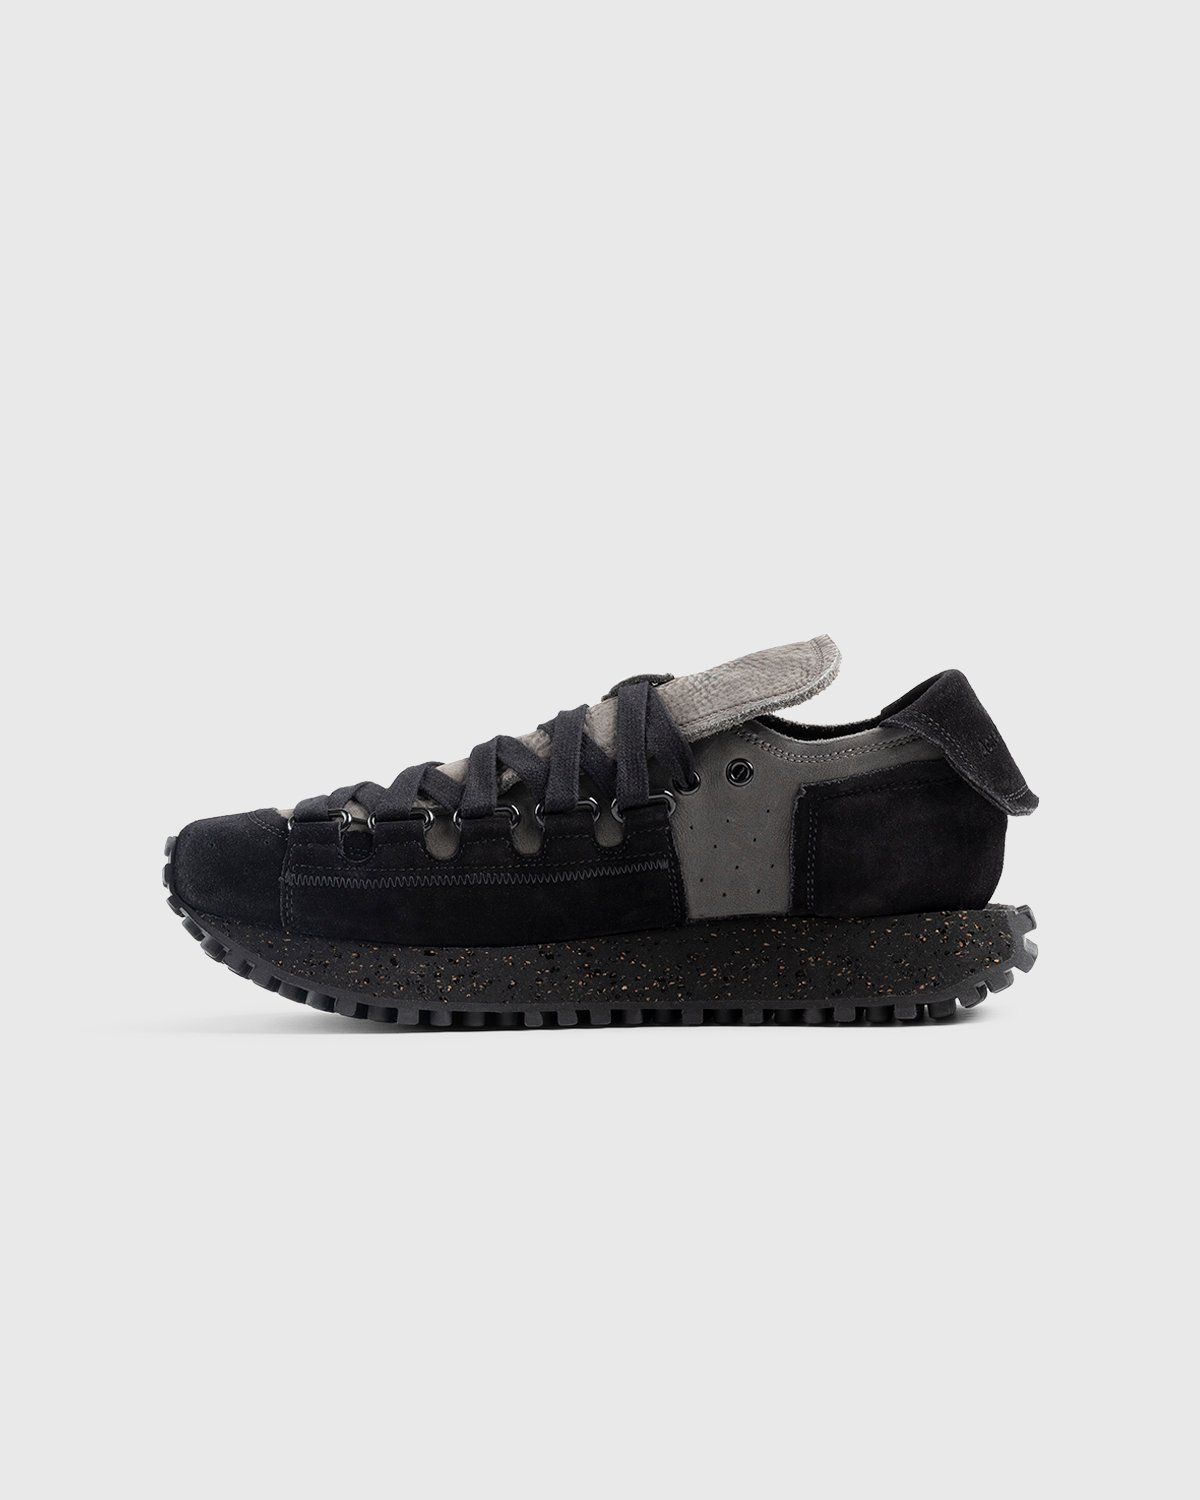 Acne Studios - Nofo Lace-Up Sneakers Grey/Black - Footwear - Black - Image 2